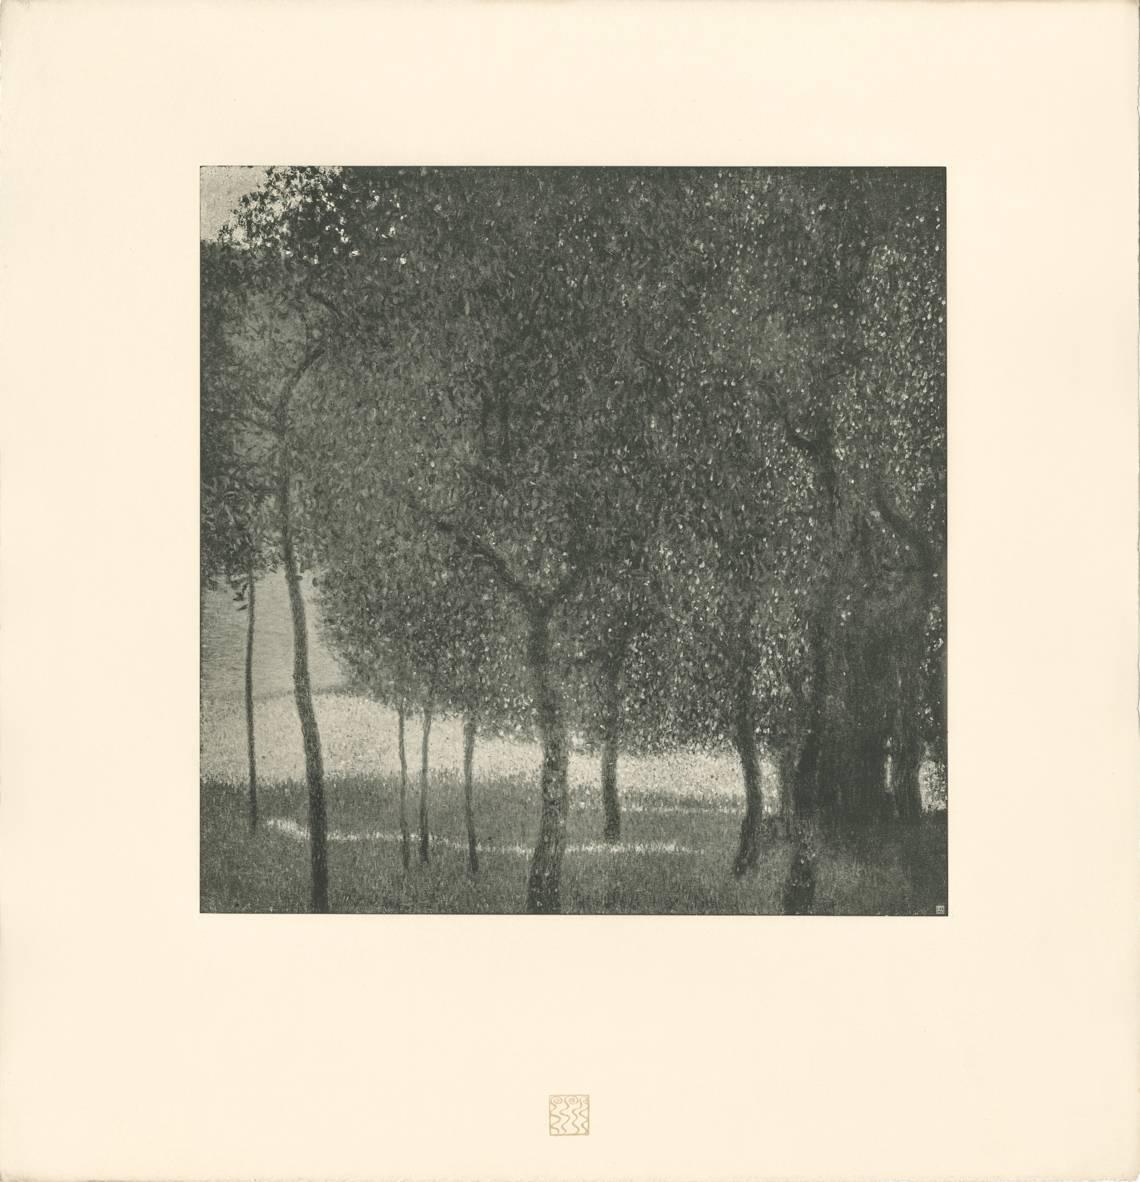 H.O. Miethke Das Werk folio "Fruit Trees" collotype print